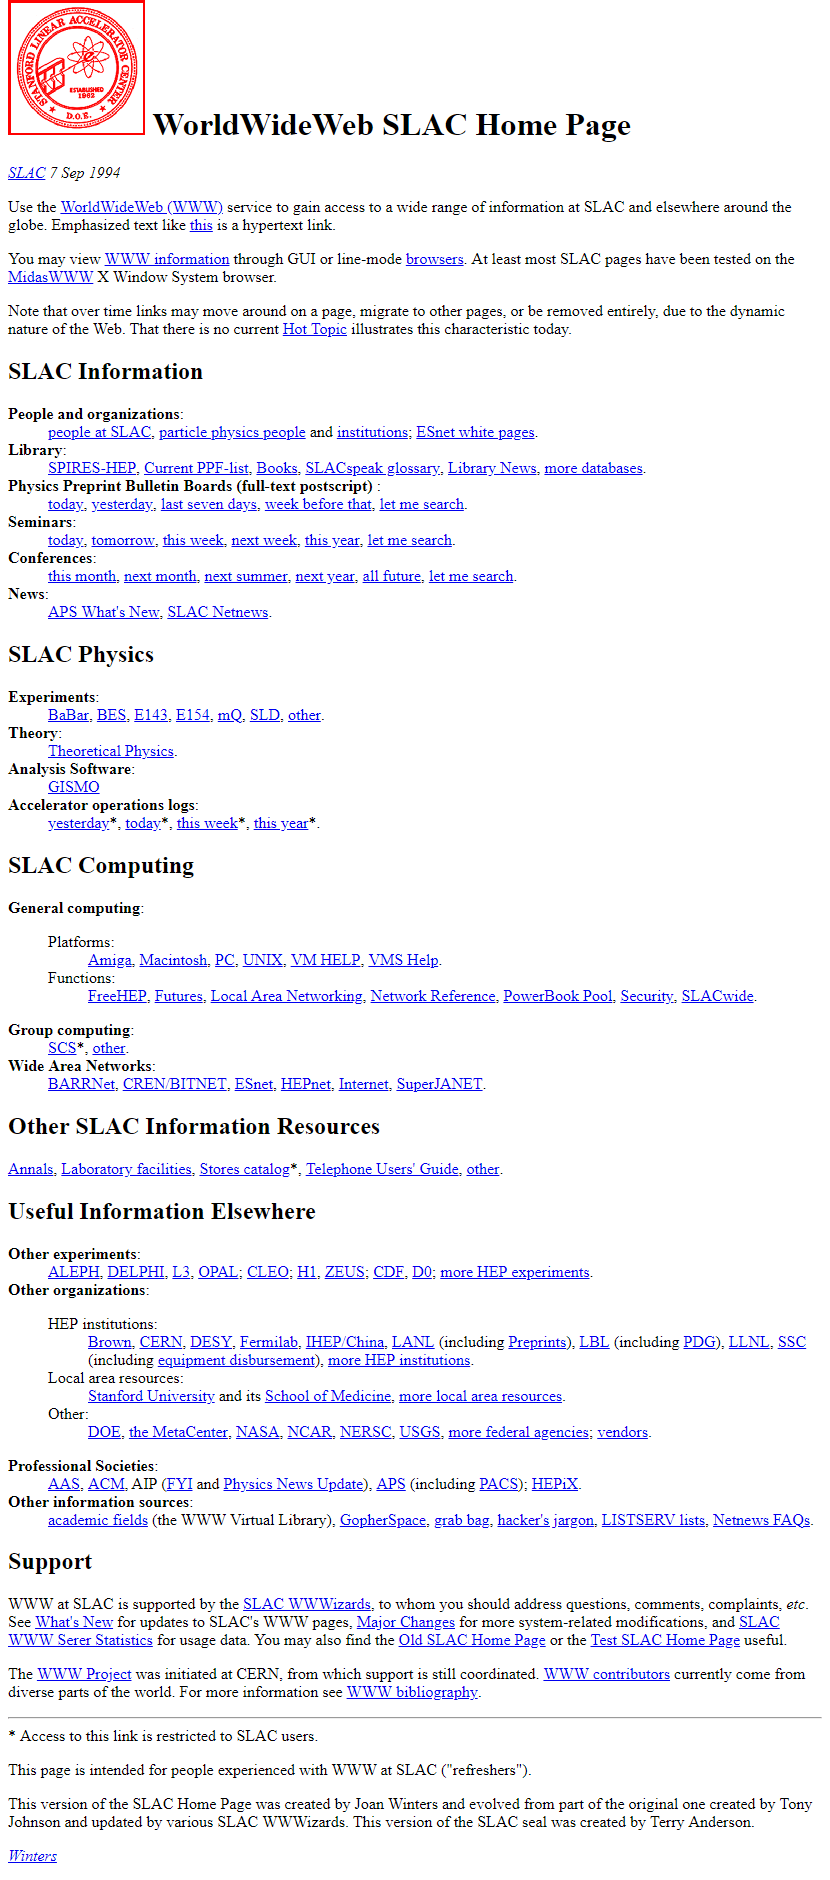 SLAC website in 1994